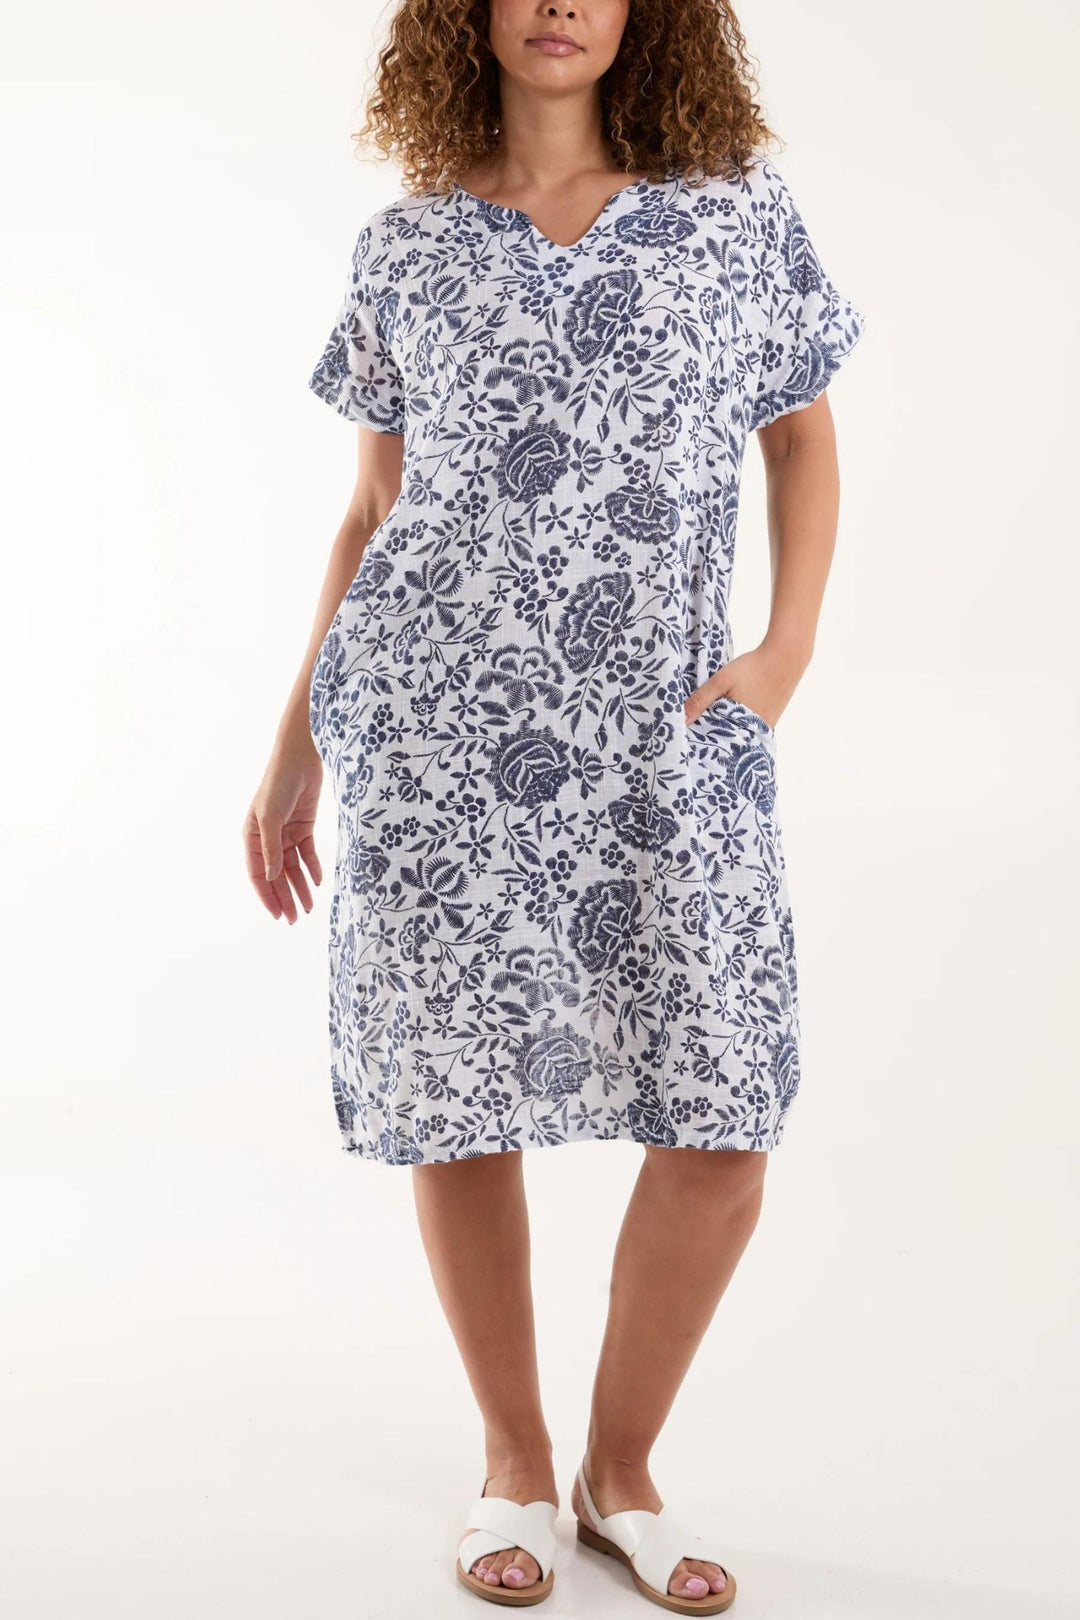 White & Navy Floral Print Lightweight Shift Dress